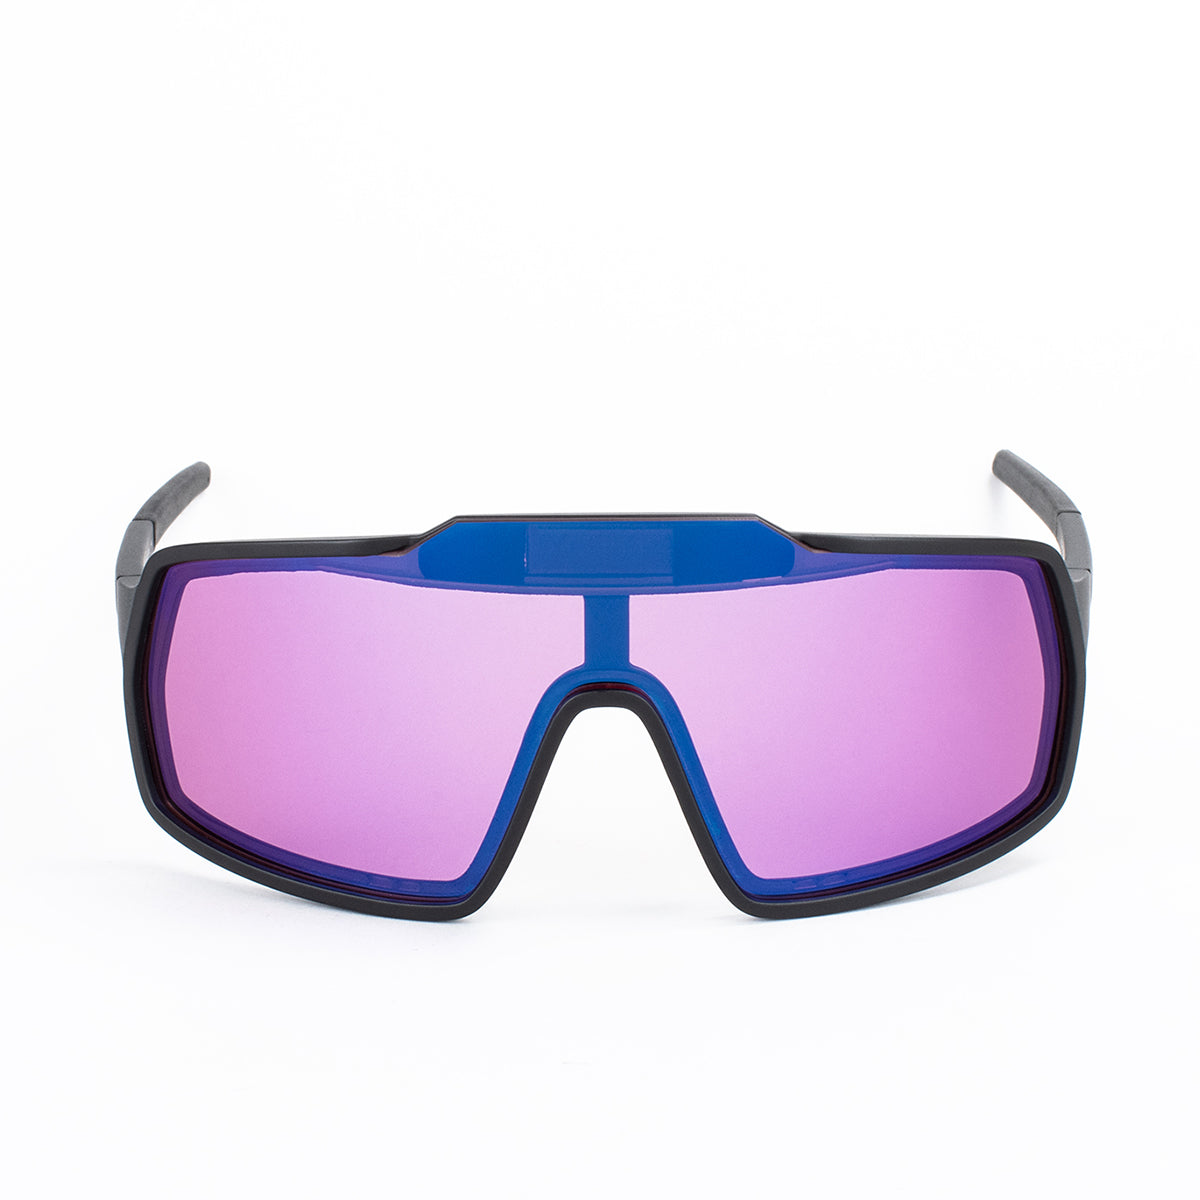 OutOf Elecronic Sunglasses Bot 2Irid Blue